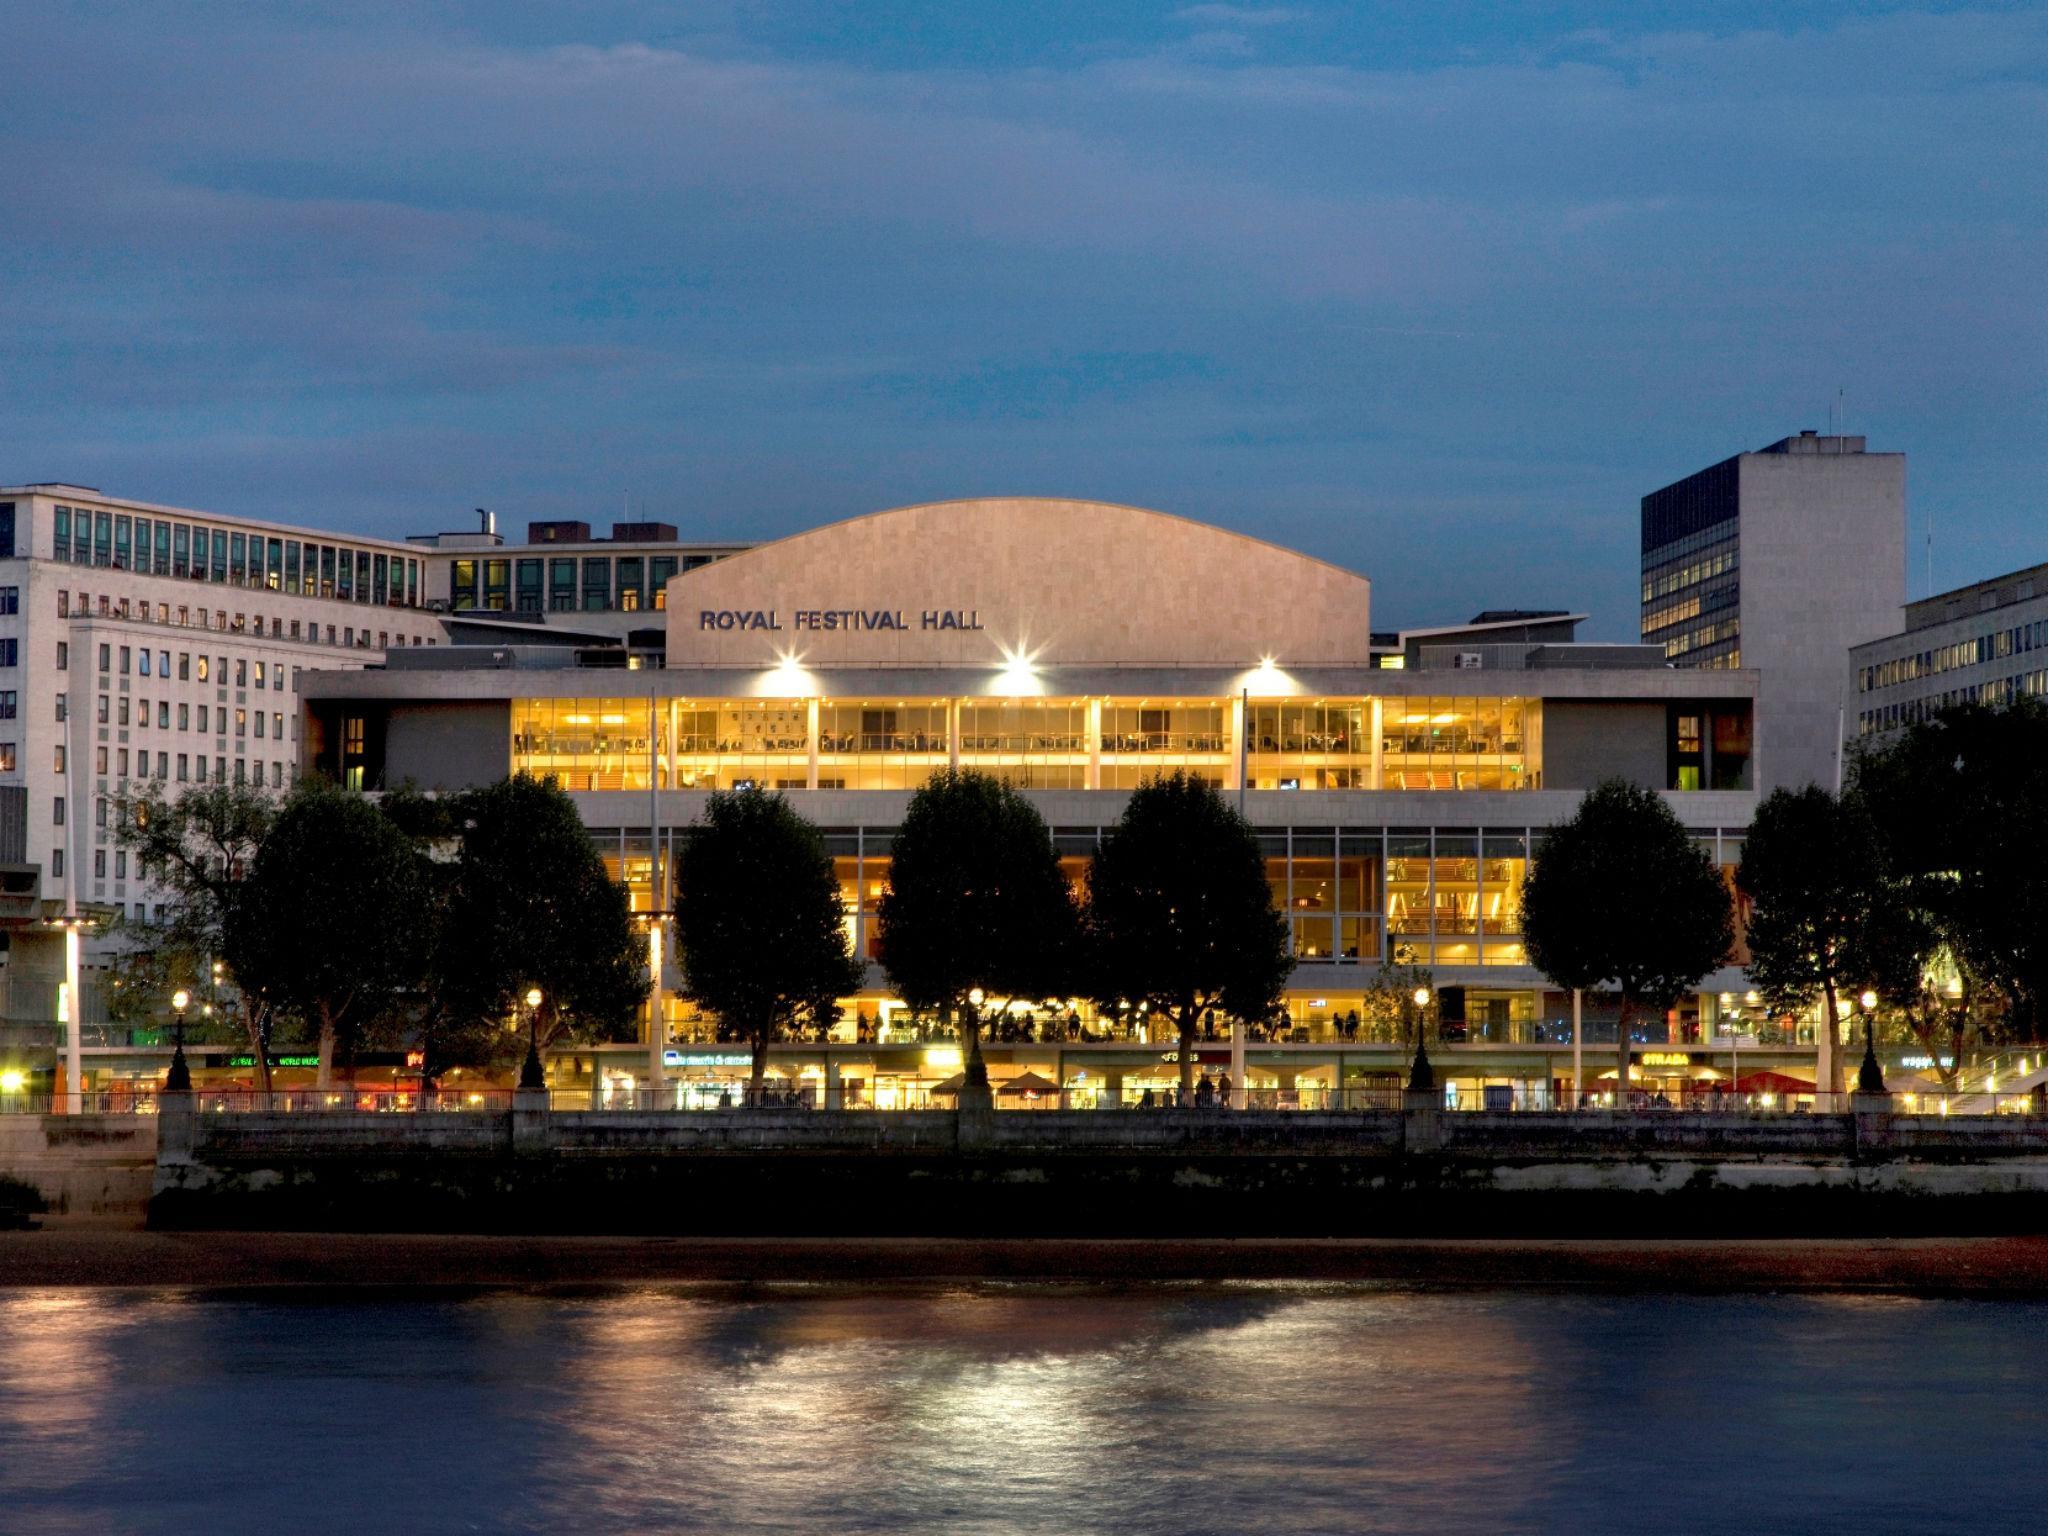 Stravinsky's opera took place in London's Royal Festival Hall